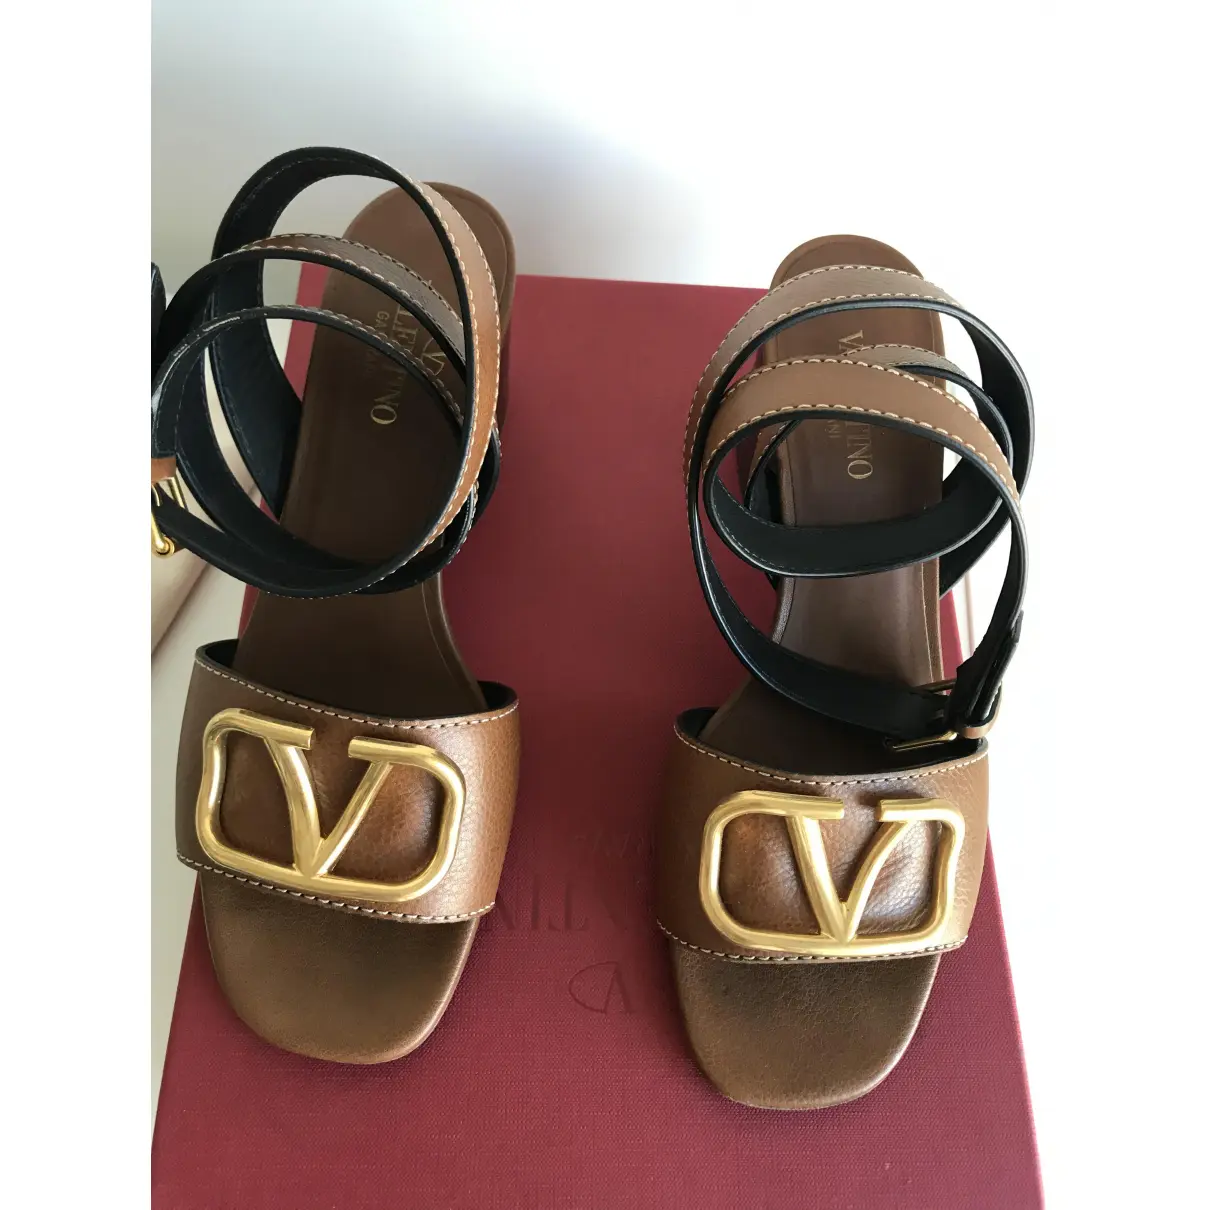 Buy Valentino Garavani VLogo leather sandal online